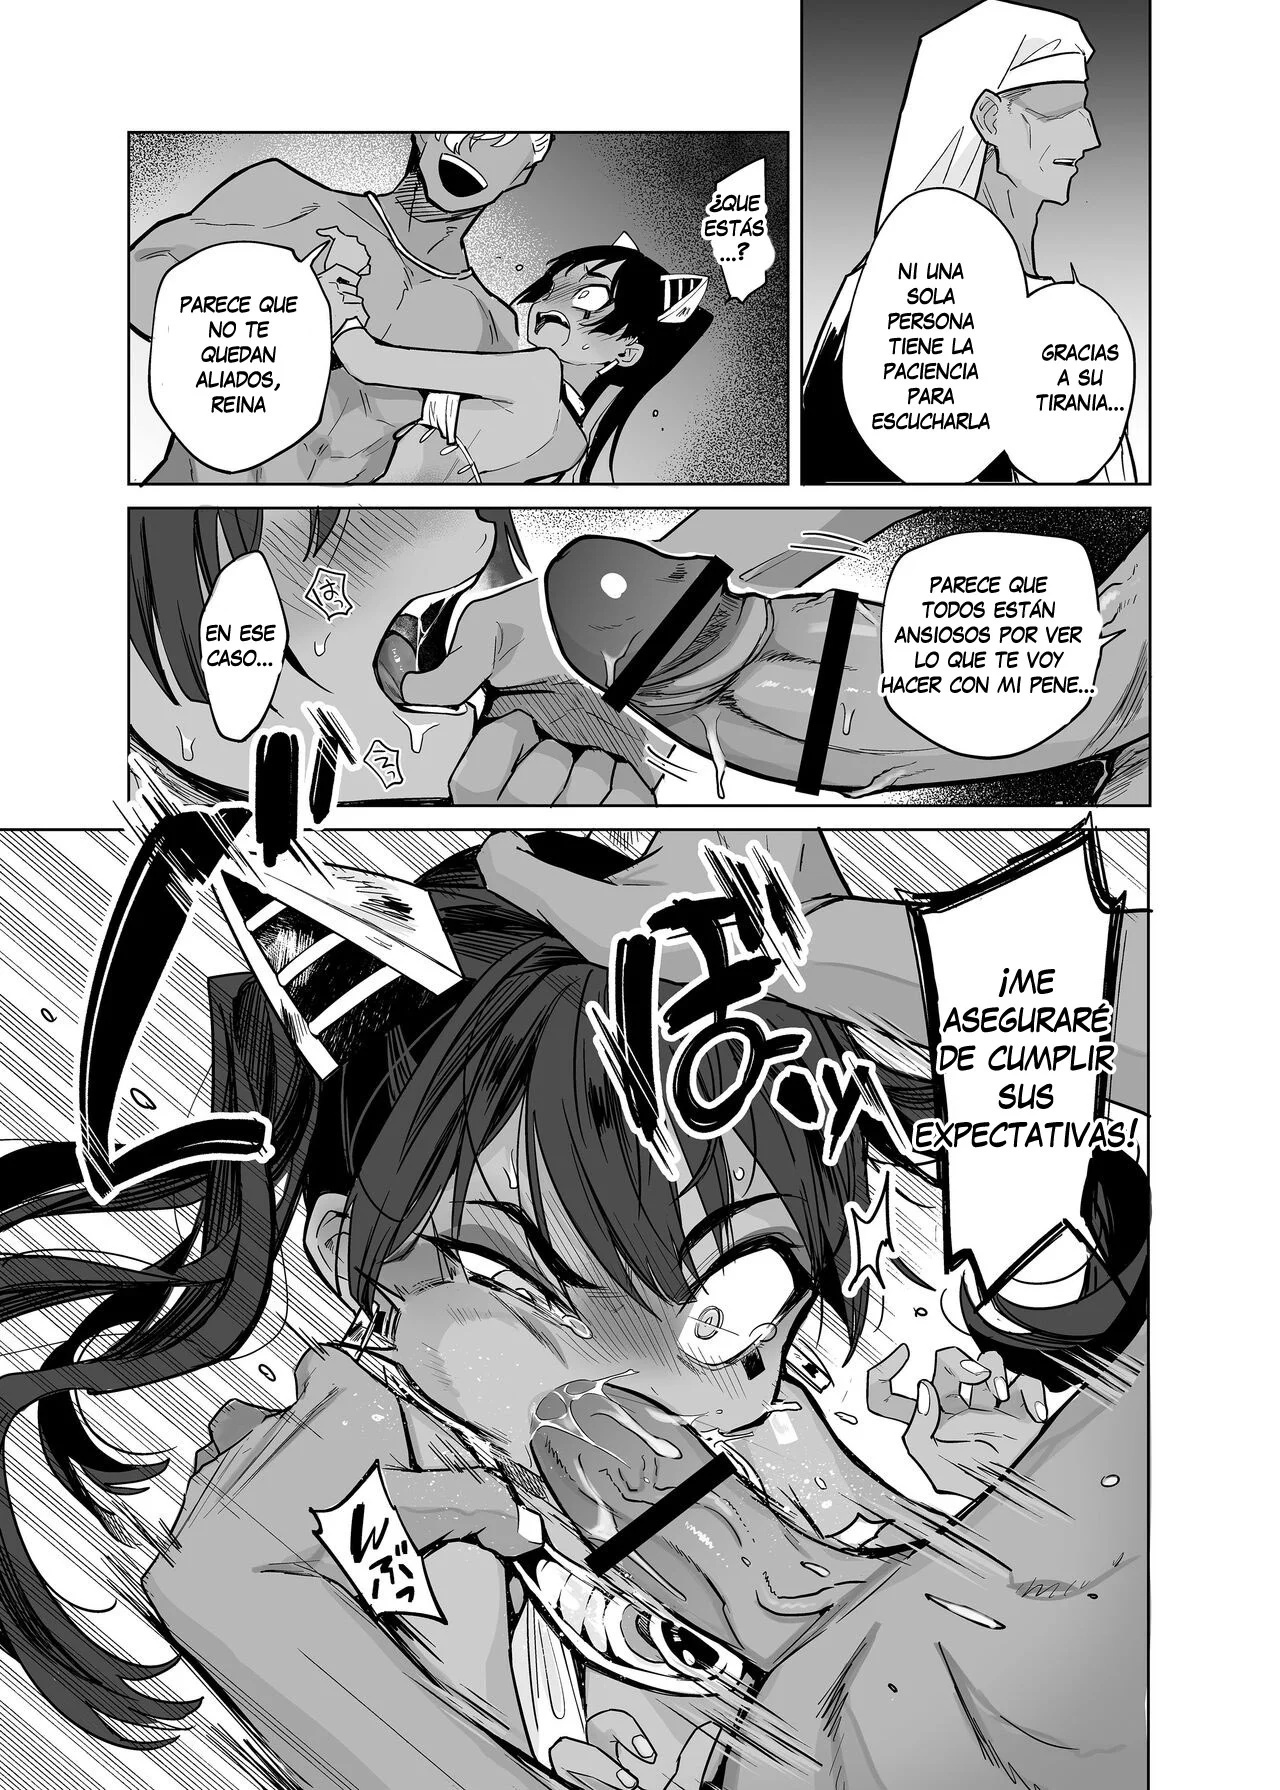 Vepto-sama! Hito o Ijimecha Ikemasen! | Wept-sama! You Mustn't Torment The Humans! ~Evil Deity Queen - 32